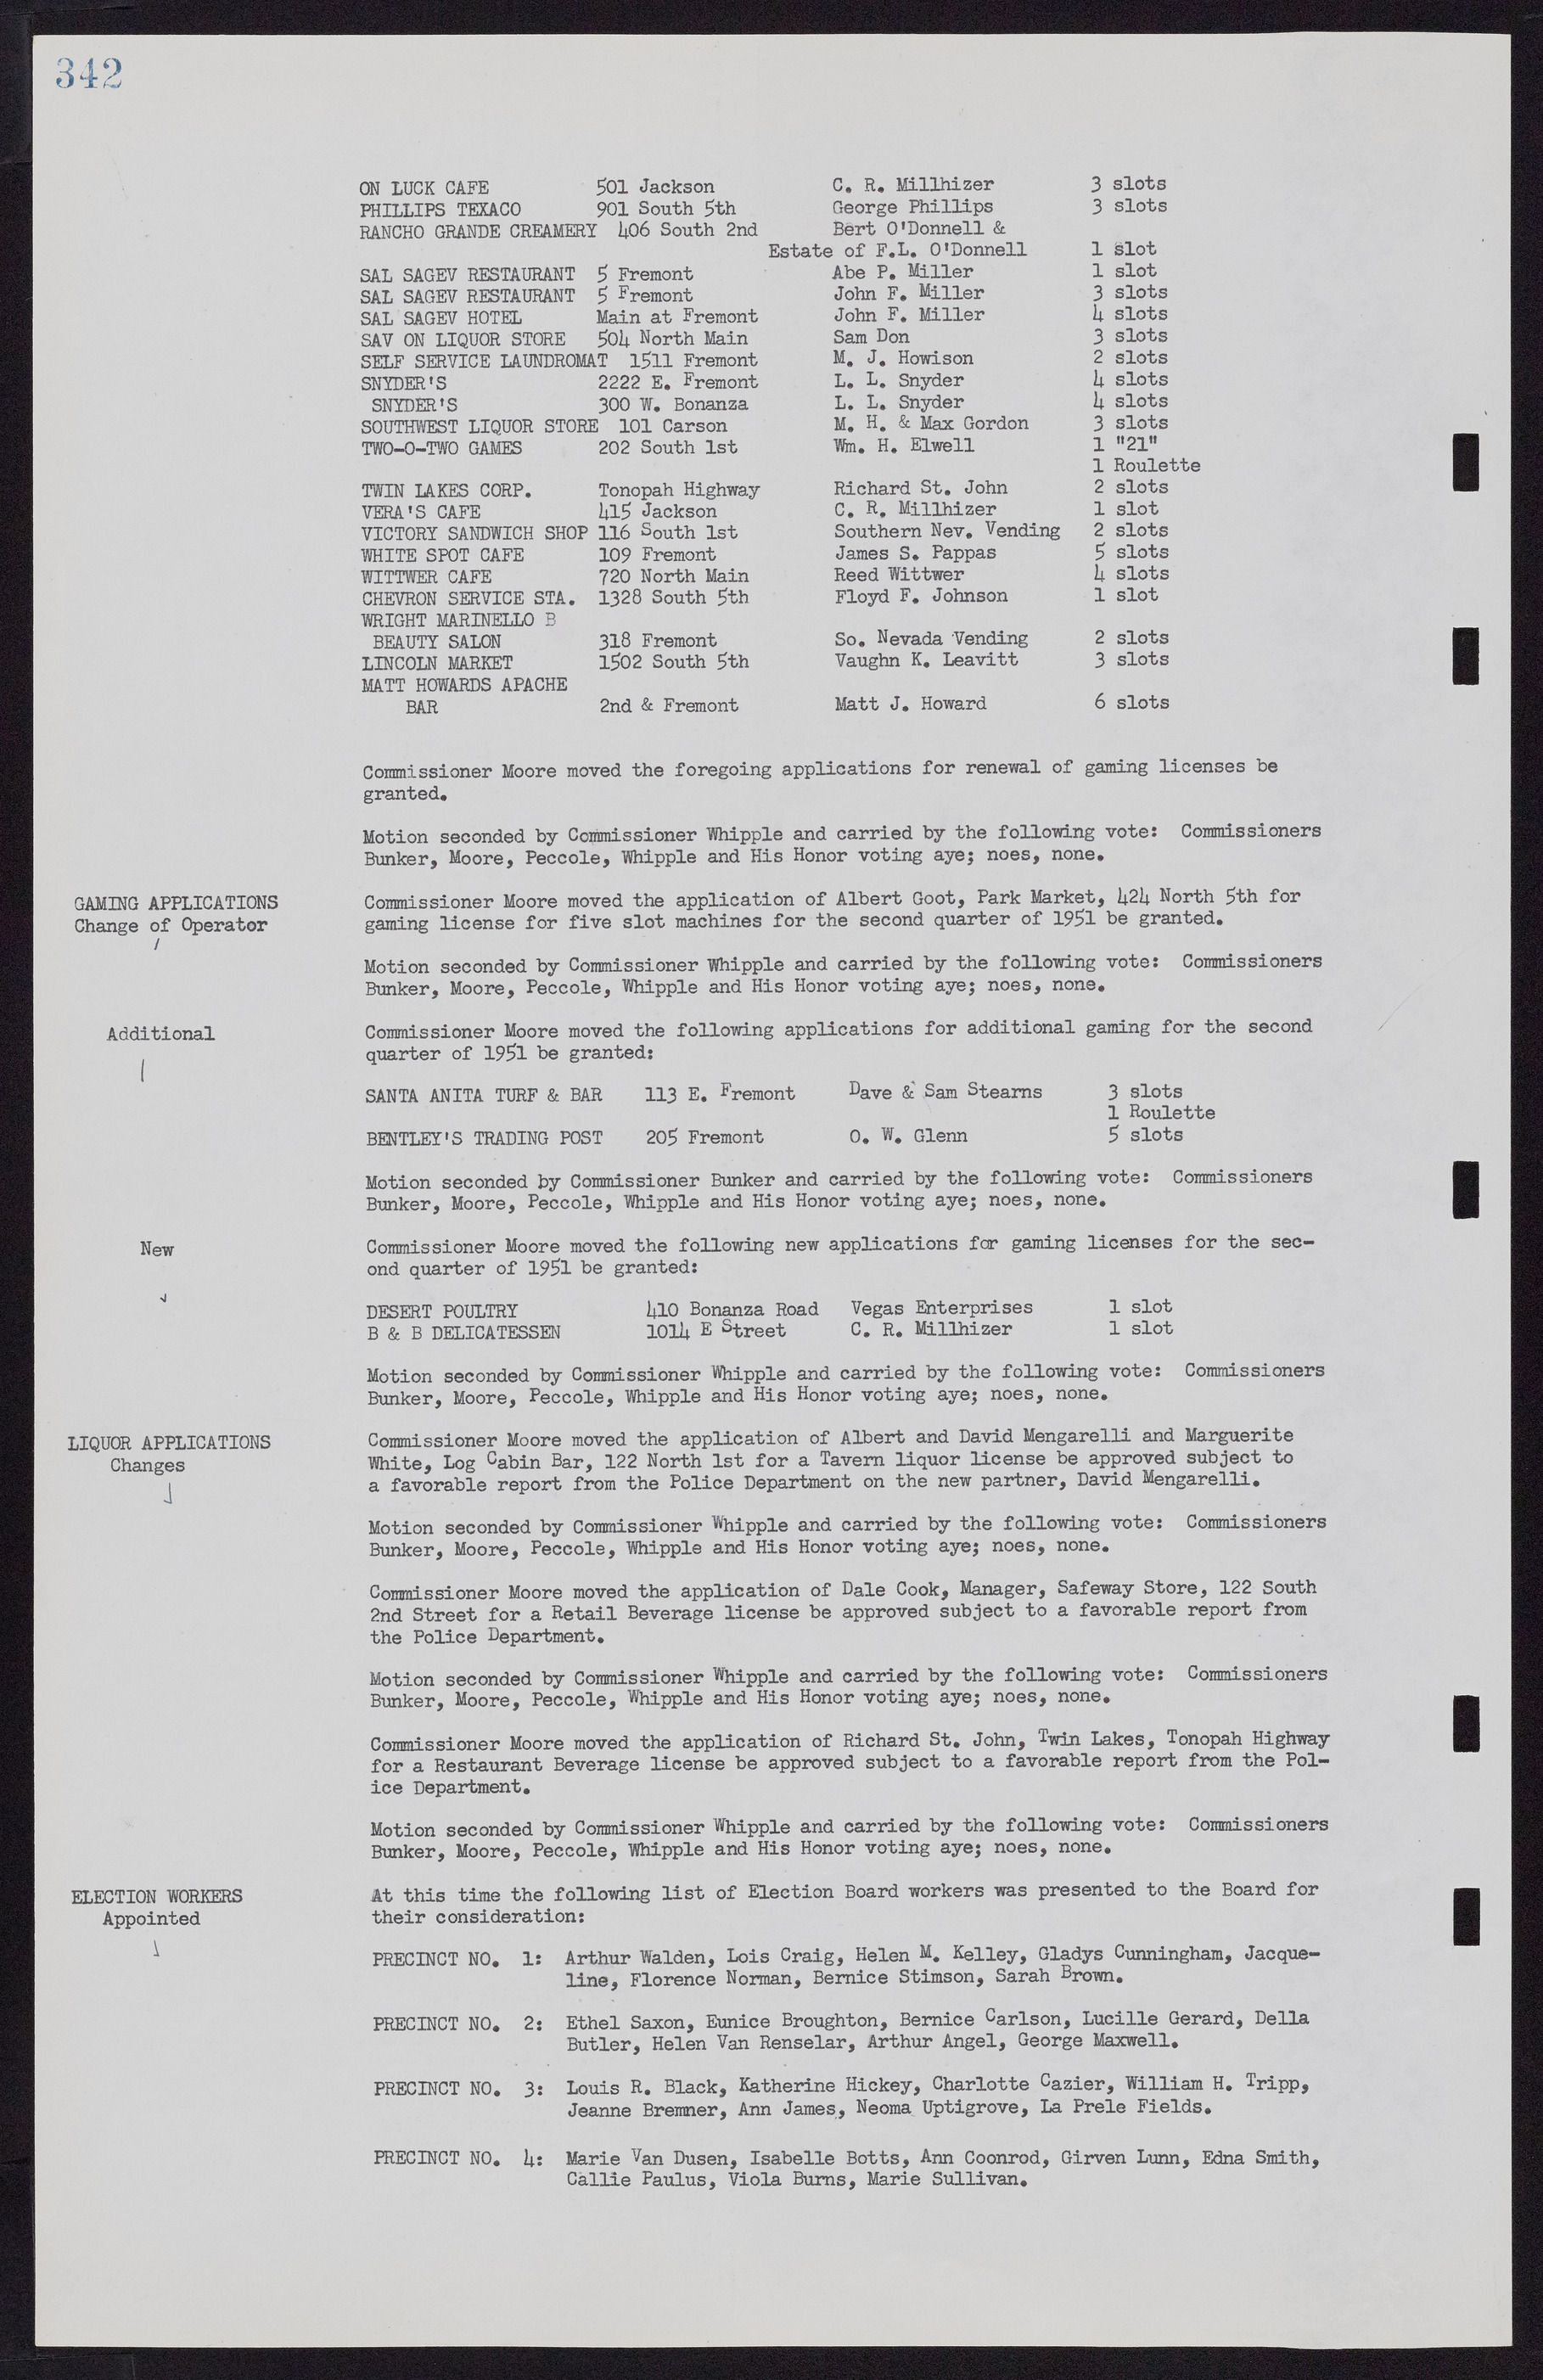 Las Vegas City Commission Minutes, November 7, 1949 to May 21, 1952, lvc000007-354